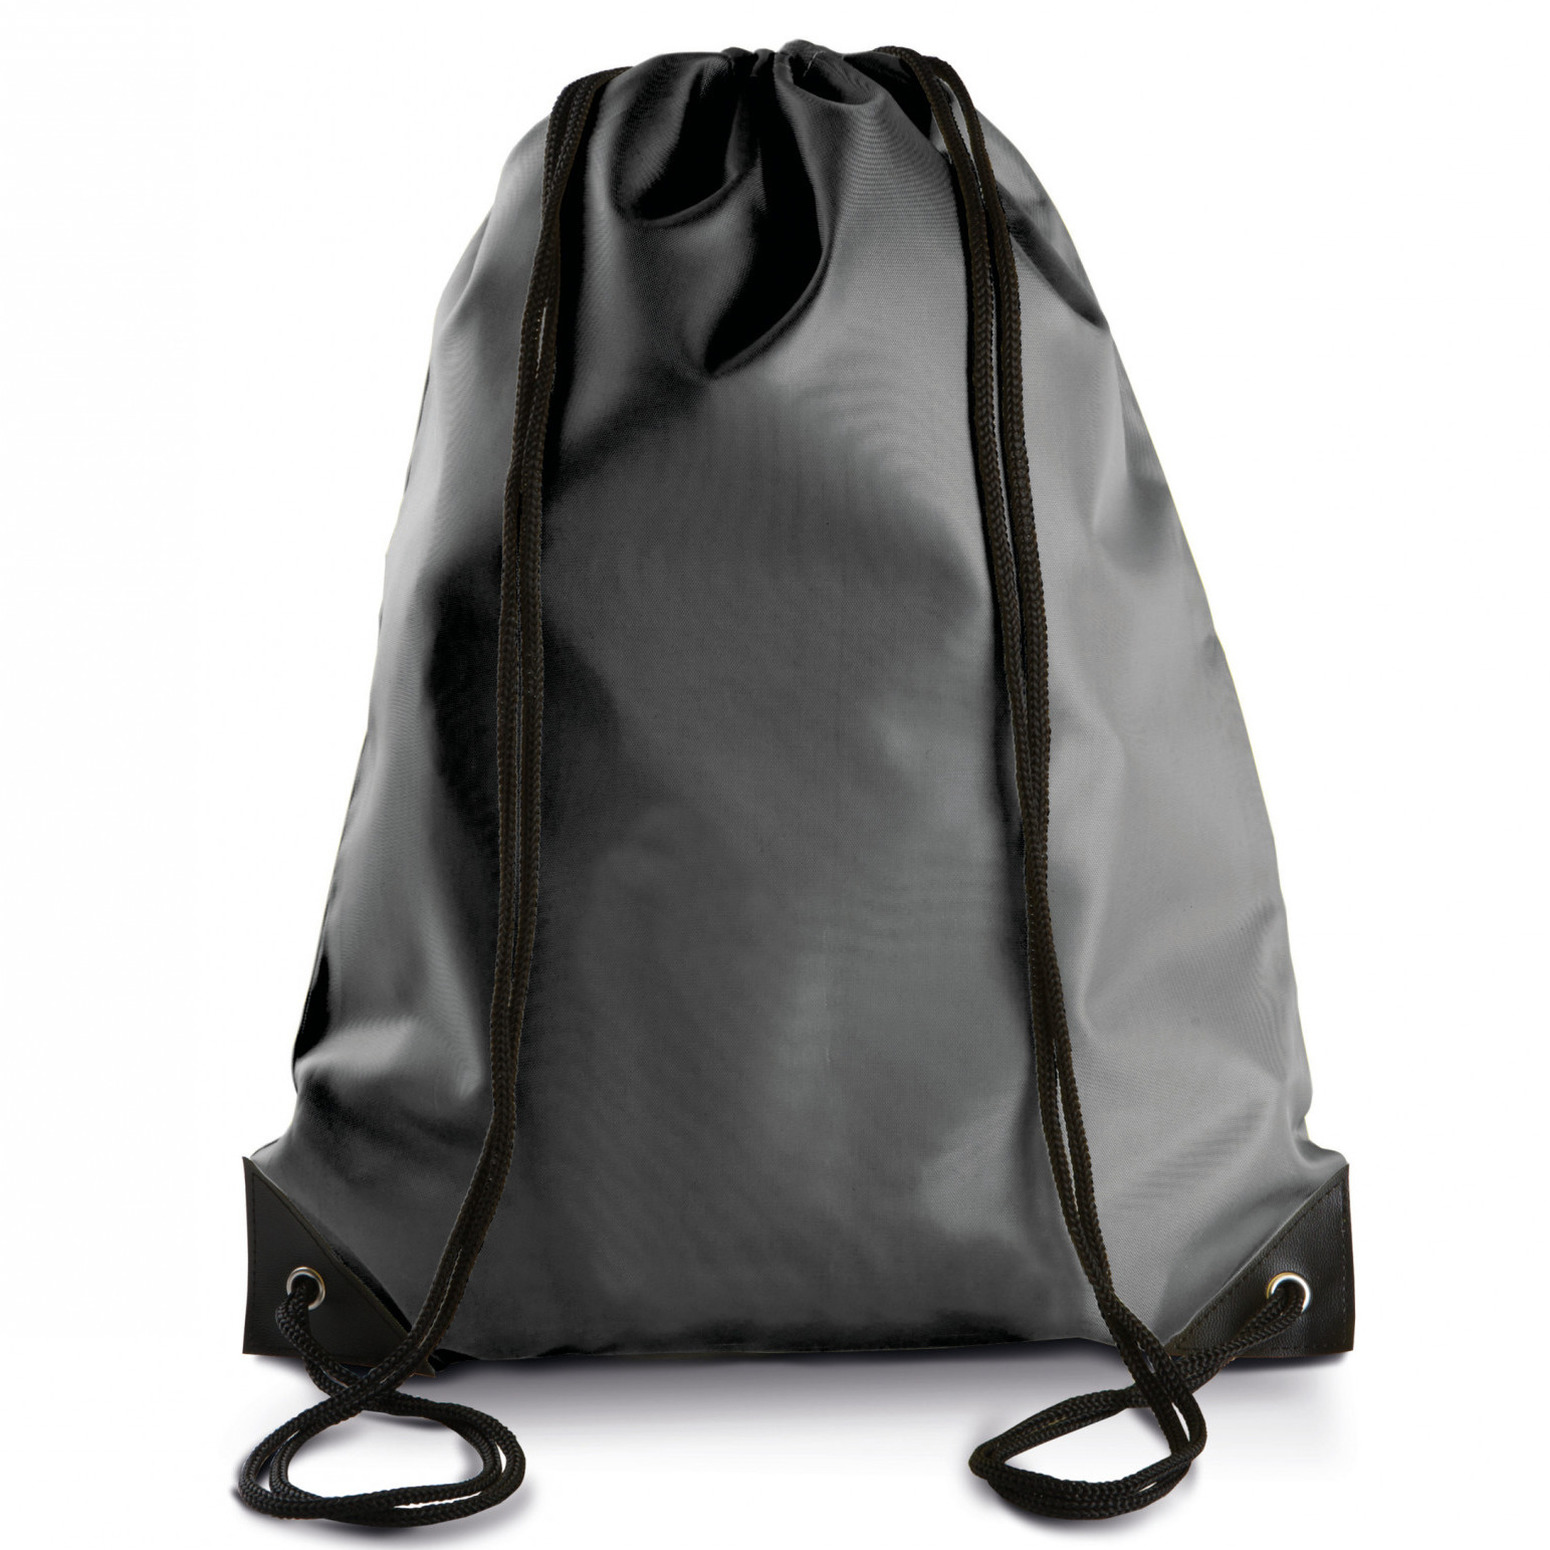 Sport gymtas-draagtas donkergrijs met rijgkoord 34 x 44 cm van polyester